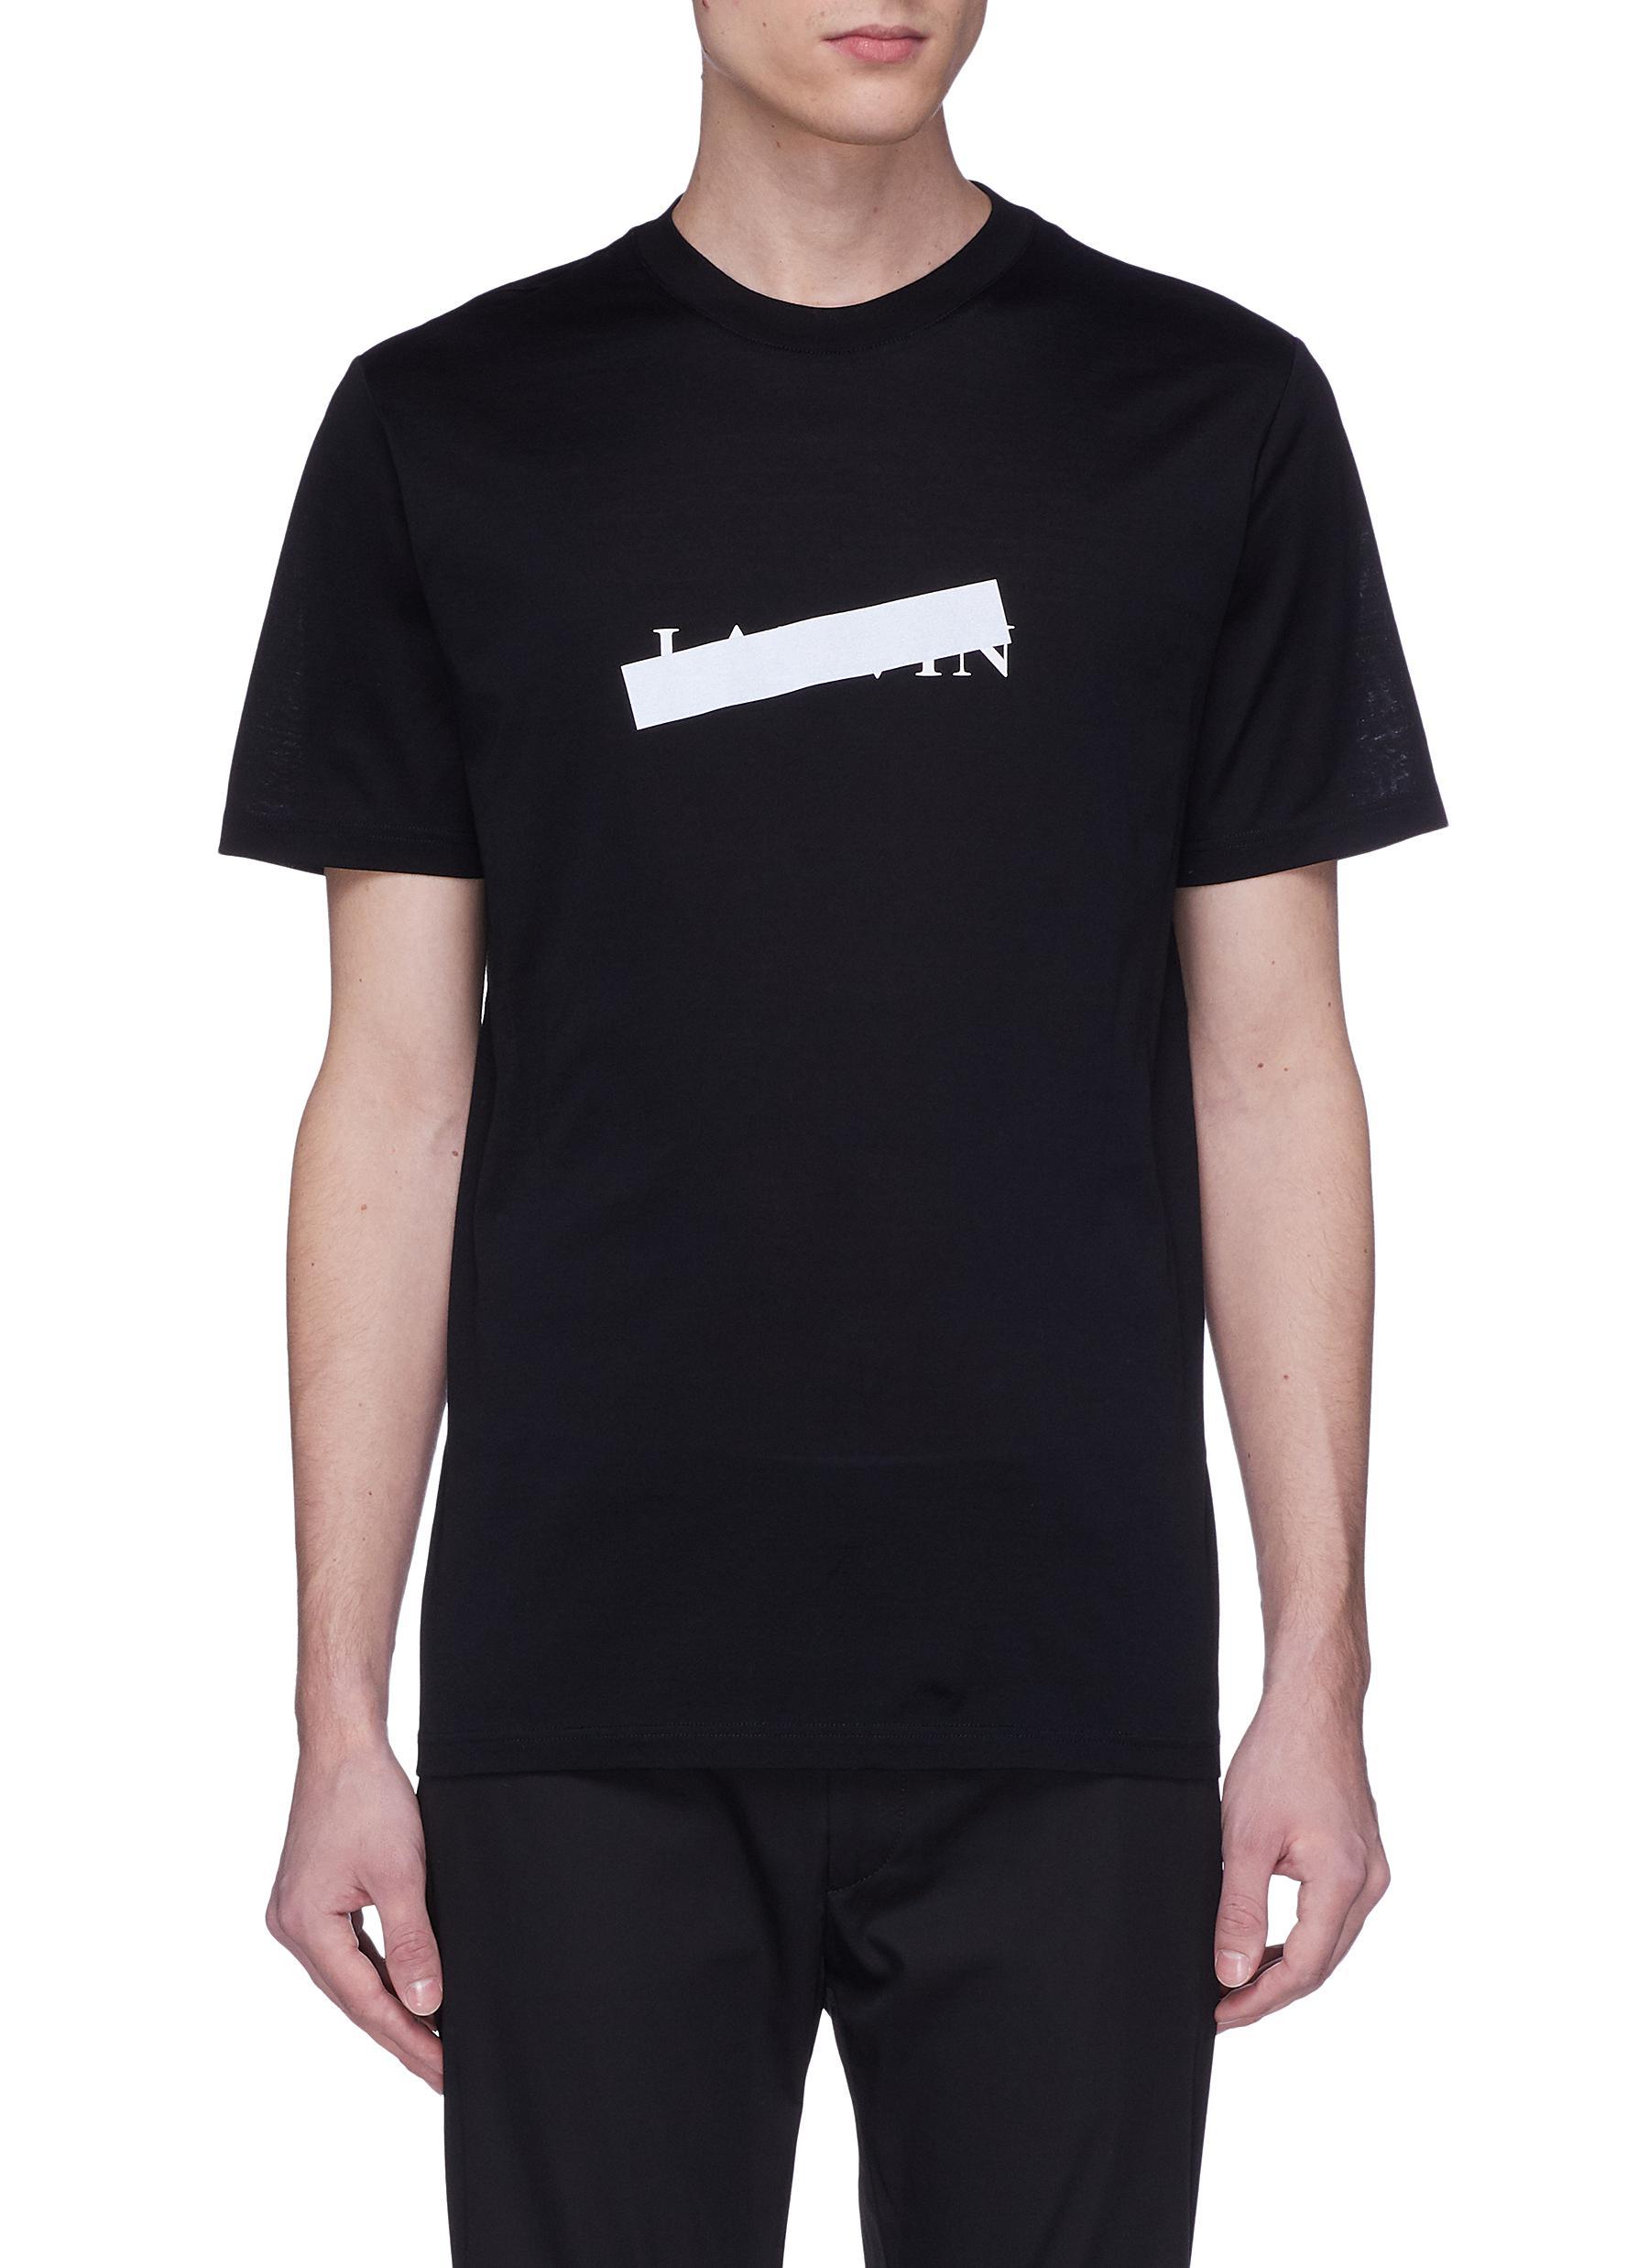 Lyst - Lanvin Reflective Tape Logo Print T-shirt in Black for Men